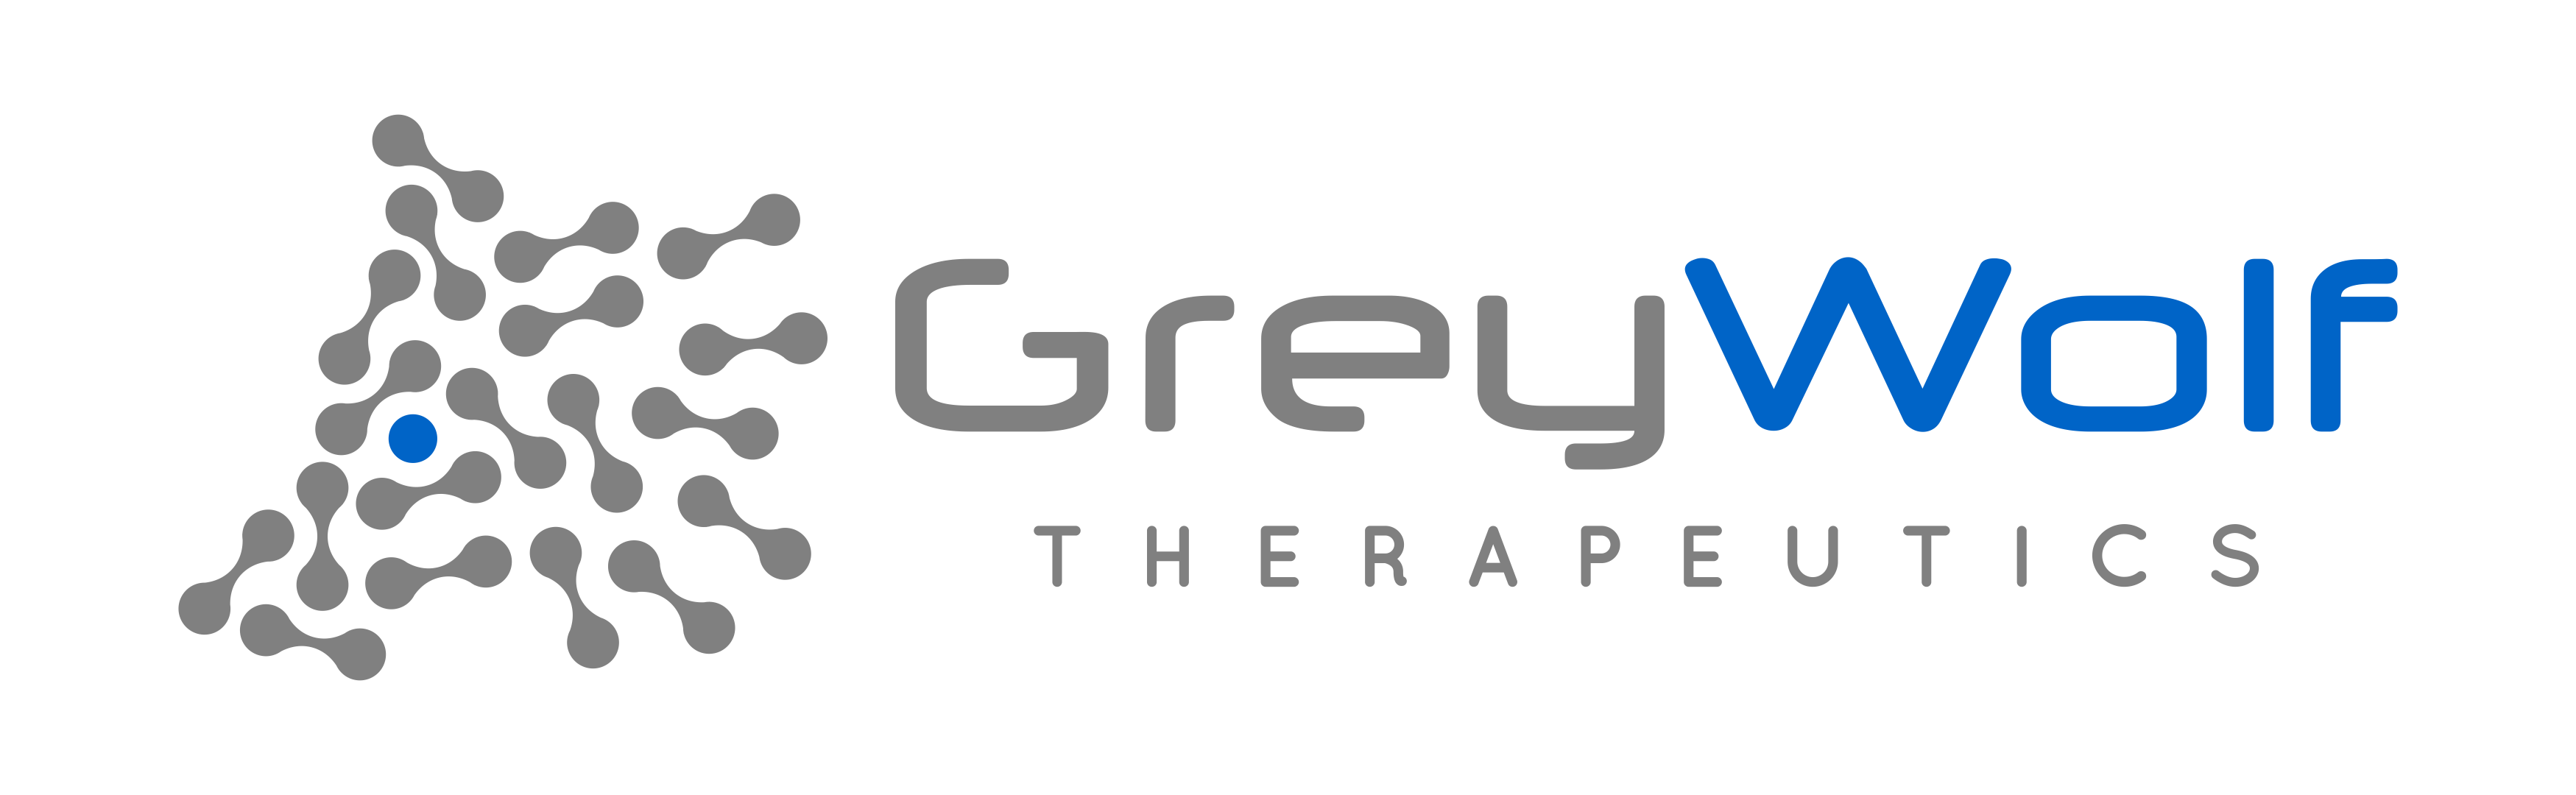 Grey Wolf Therapeutics logo